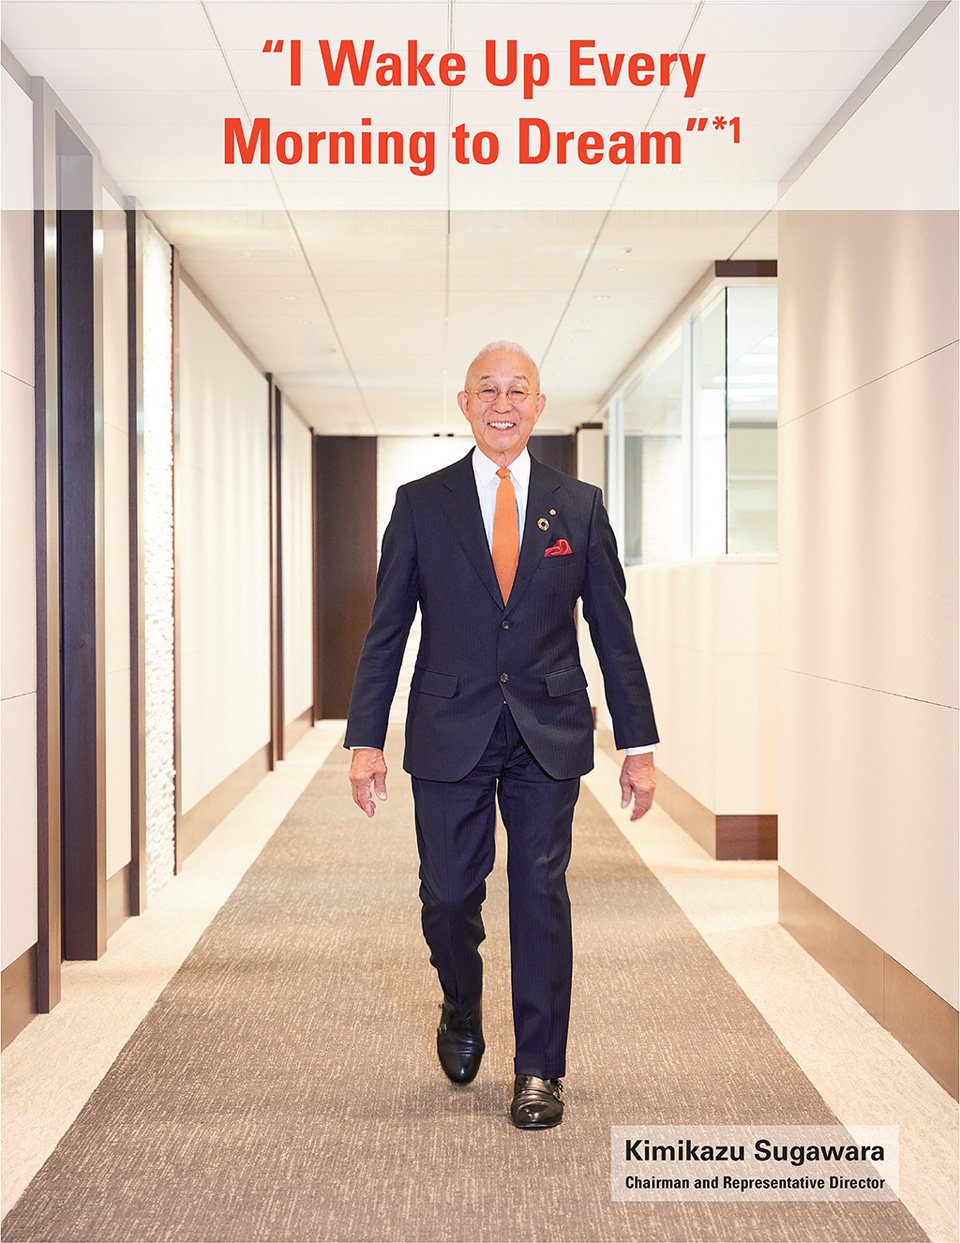 “I Wake Up Every Morning to Dream” Kimikazu Sugawara Chairman and Representative Director